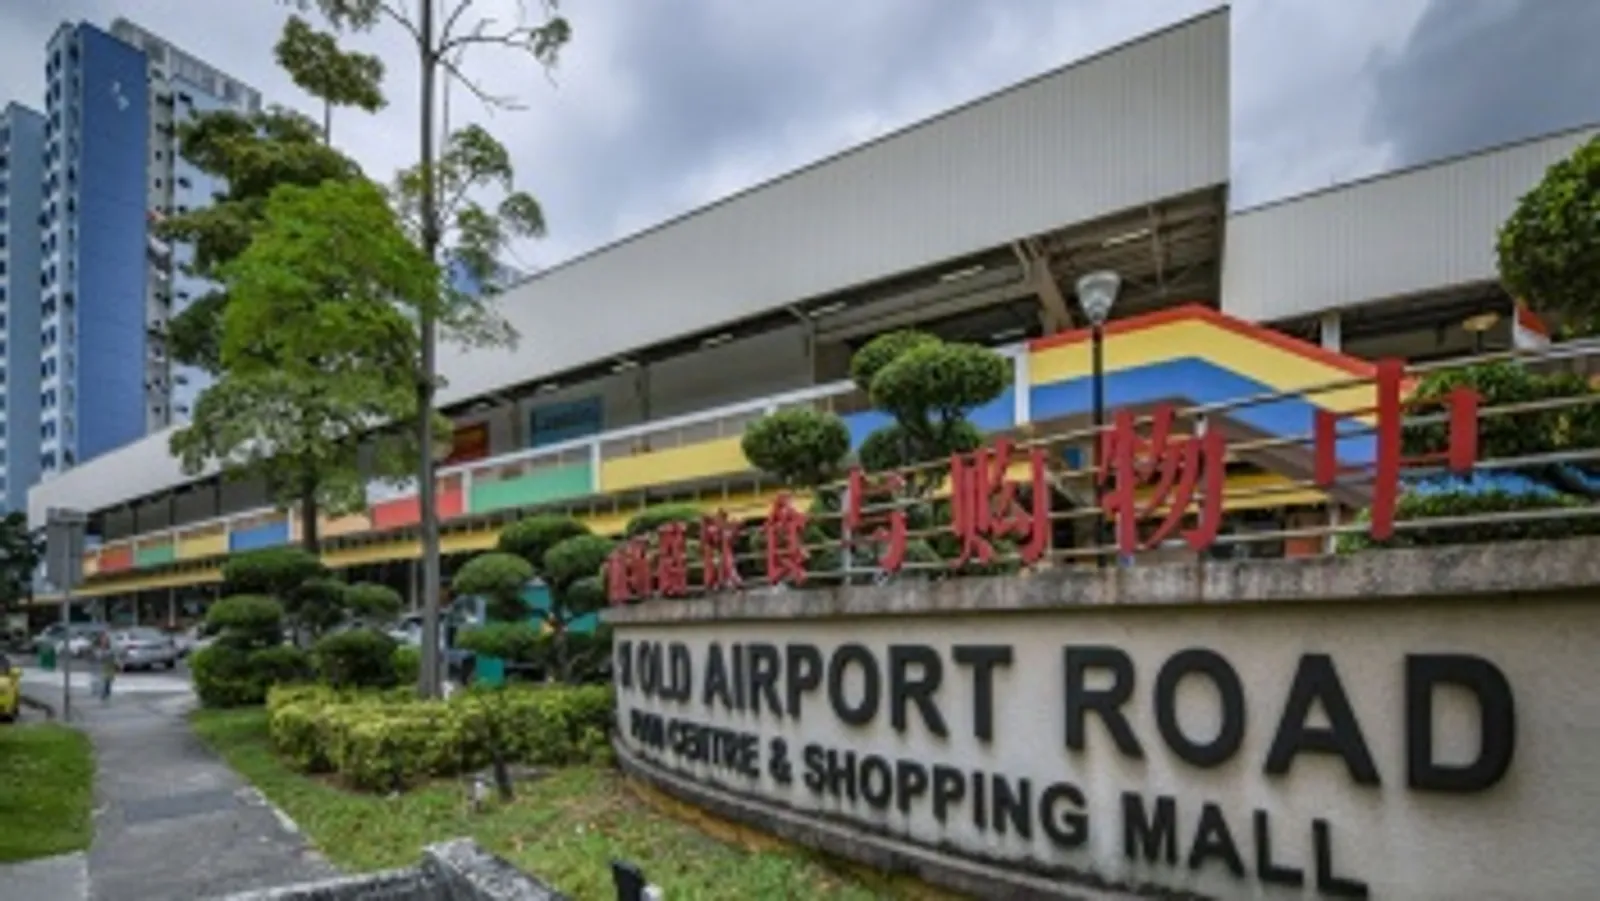 7 Pusat Jajanan Kuliner di Singapura yang Dikunjungi Selebriti
Dunia